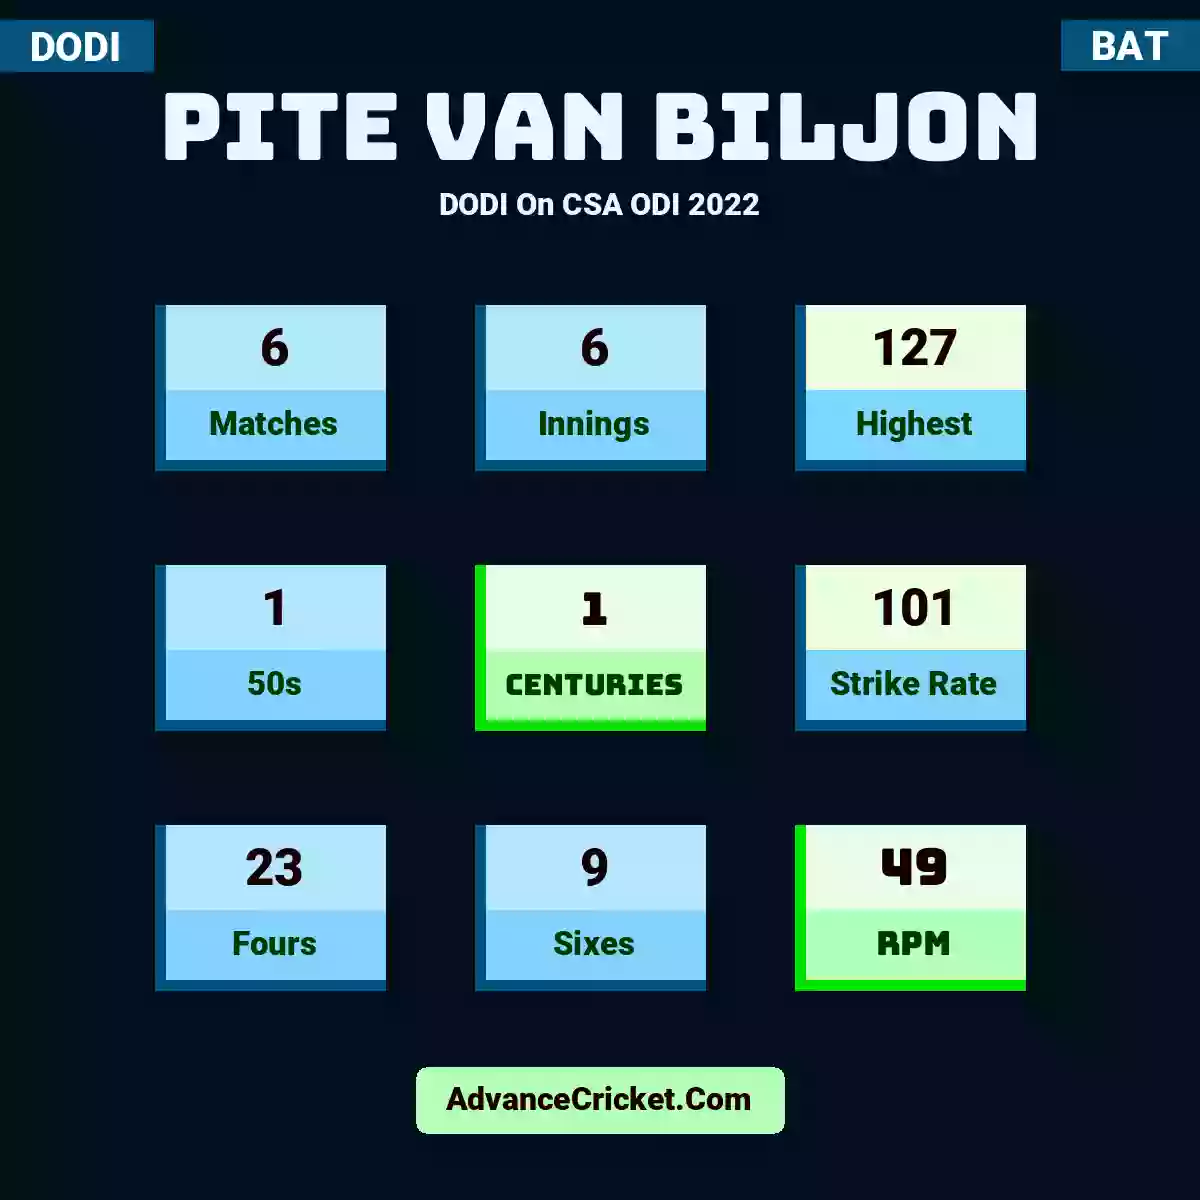 Pite van Biljon DODI  On CSA ODI 2022, Pite van Biljon played 6 matches, scored 127 runs as highest, 1 half-centuries, and 1 centuries, with a strike rate of 101. P.VBiljon hit 23 fours and 9 sixes, with an RPM of 49.